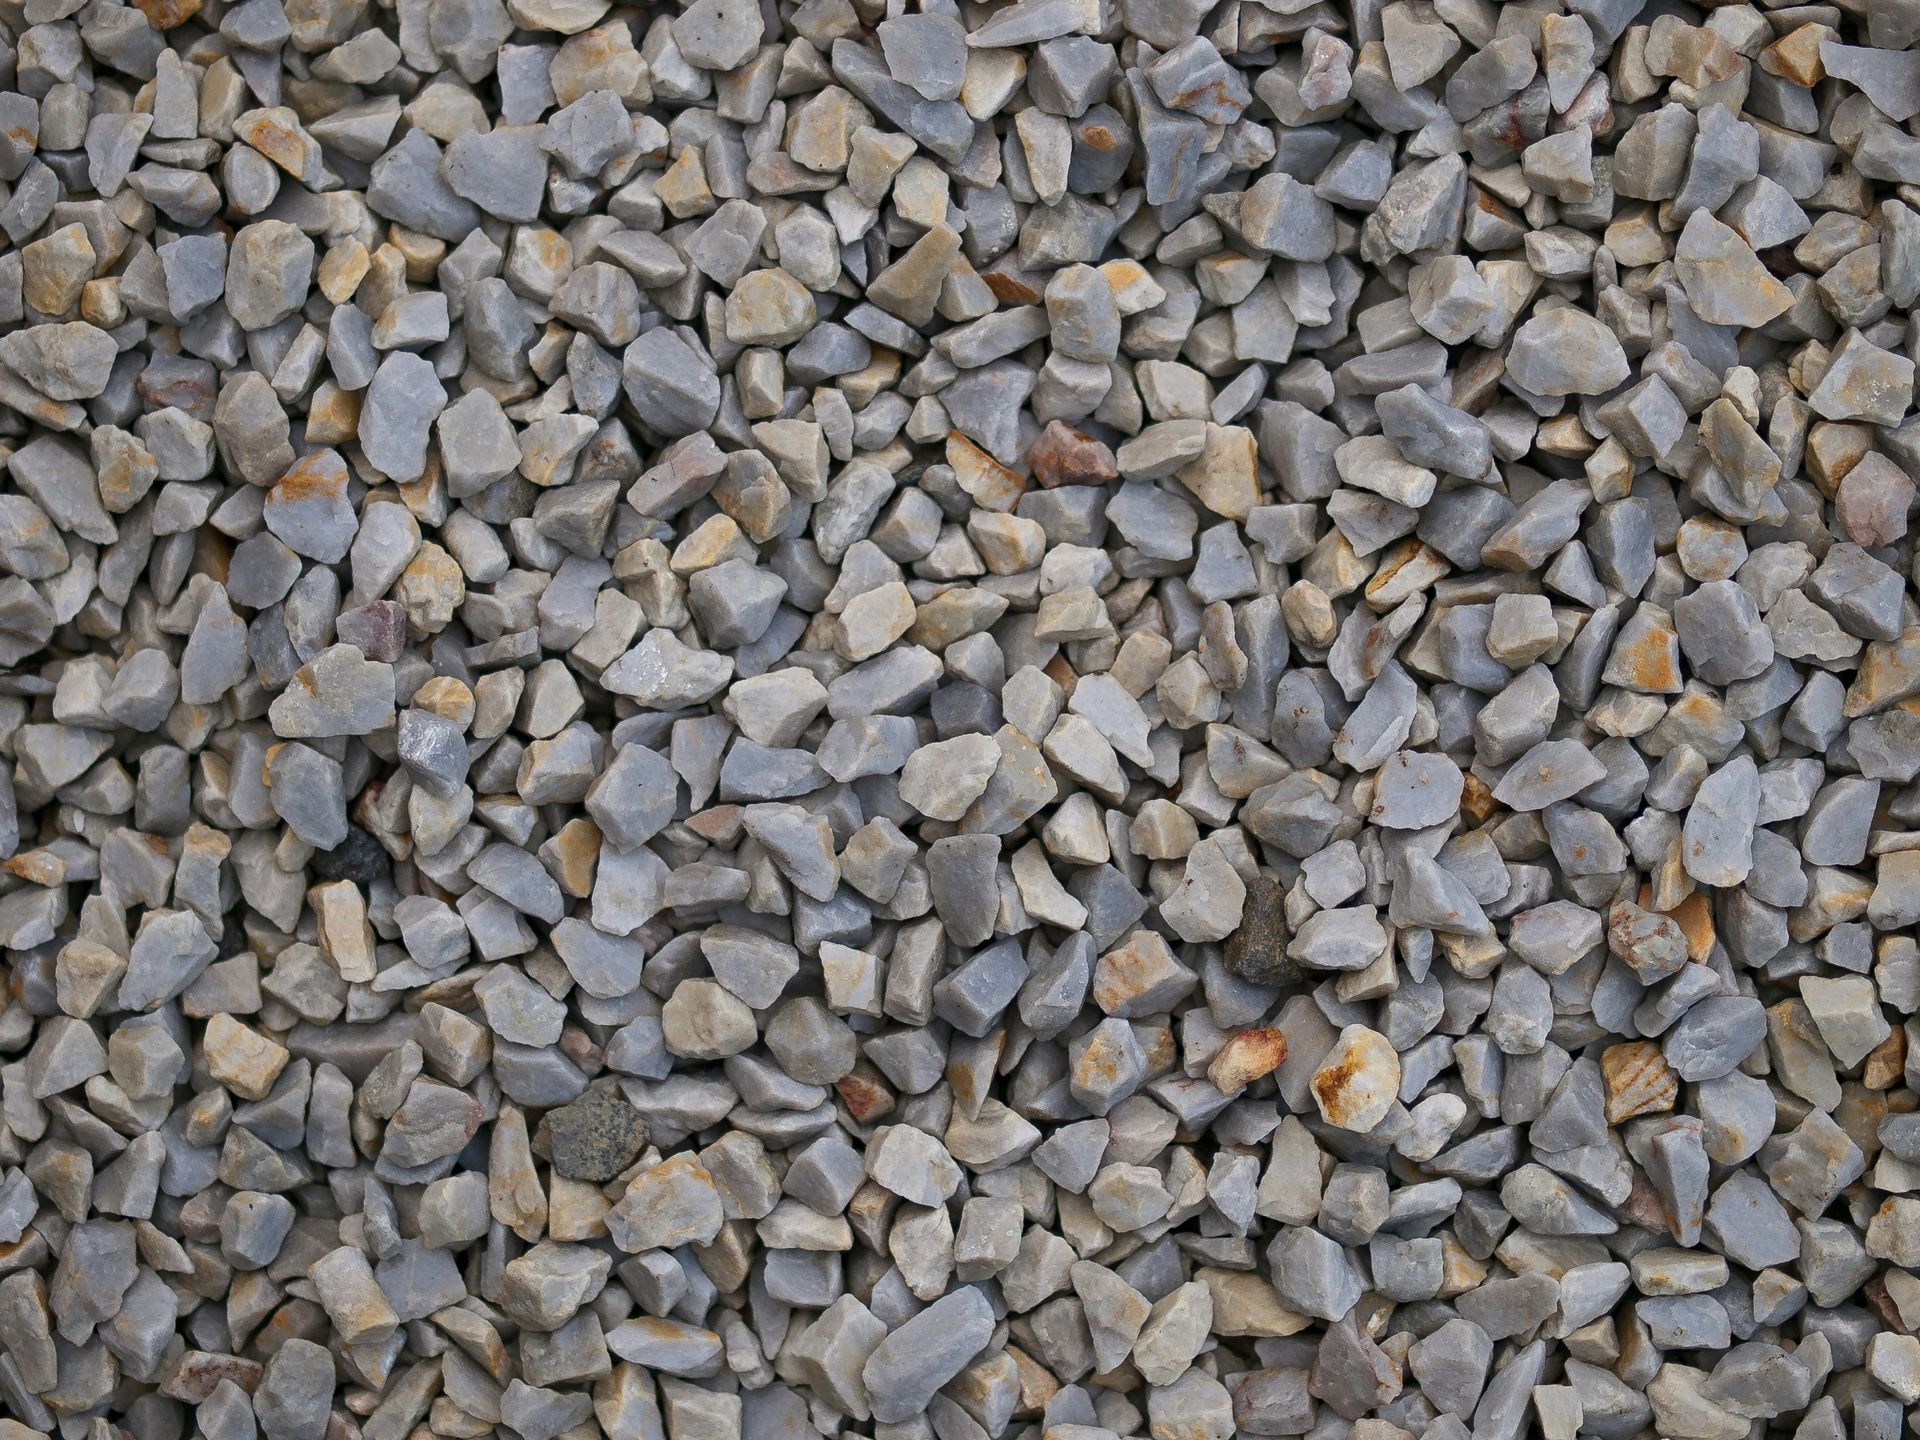 A close-up of aggregate rocks